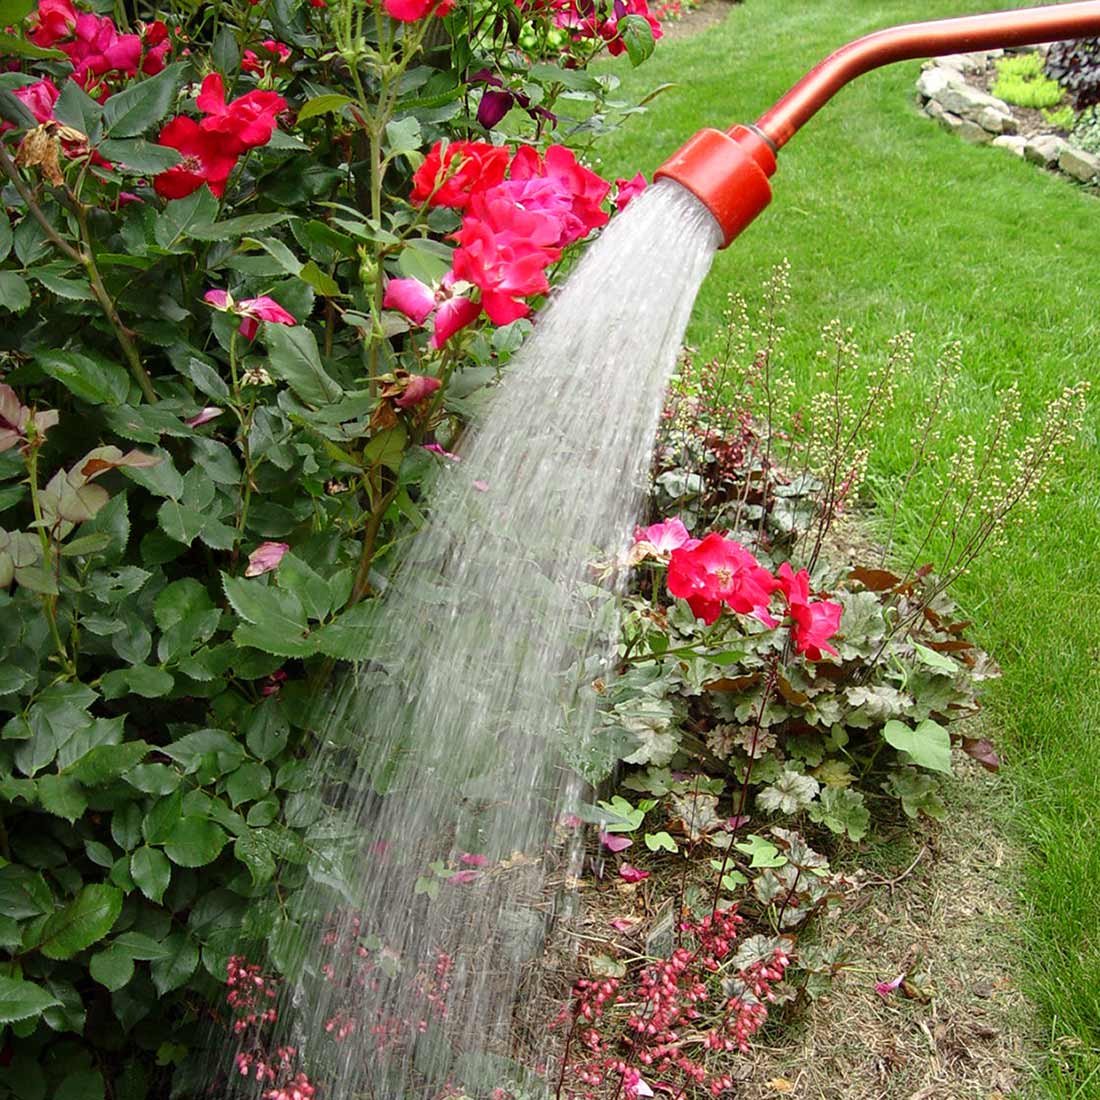 Watering roses and perennials